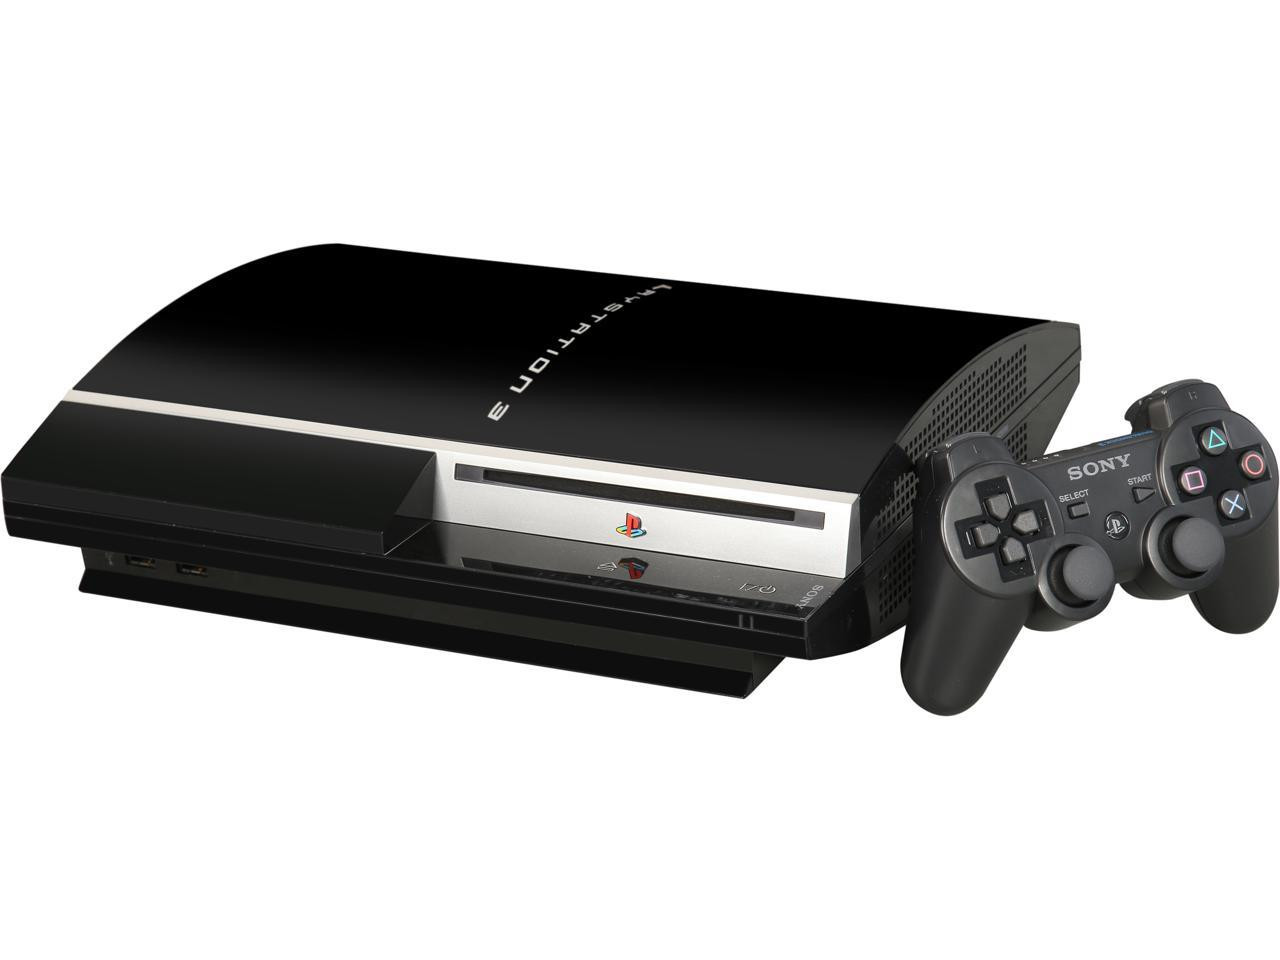 Sony PlayStation 3 Console Black with 4 USB 80GB